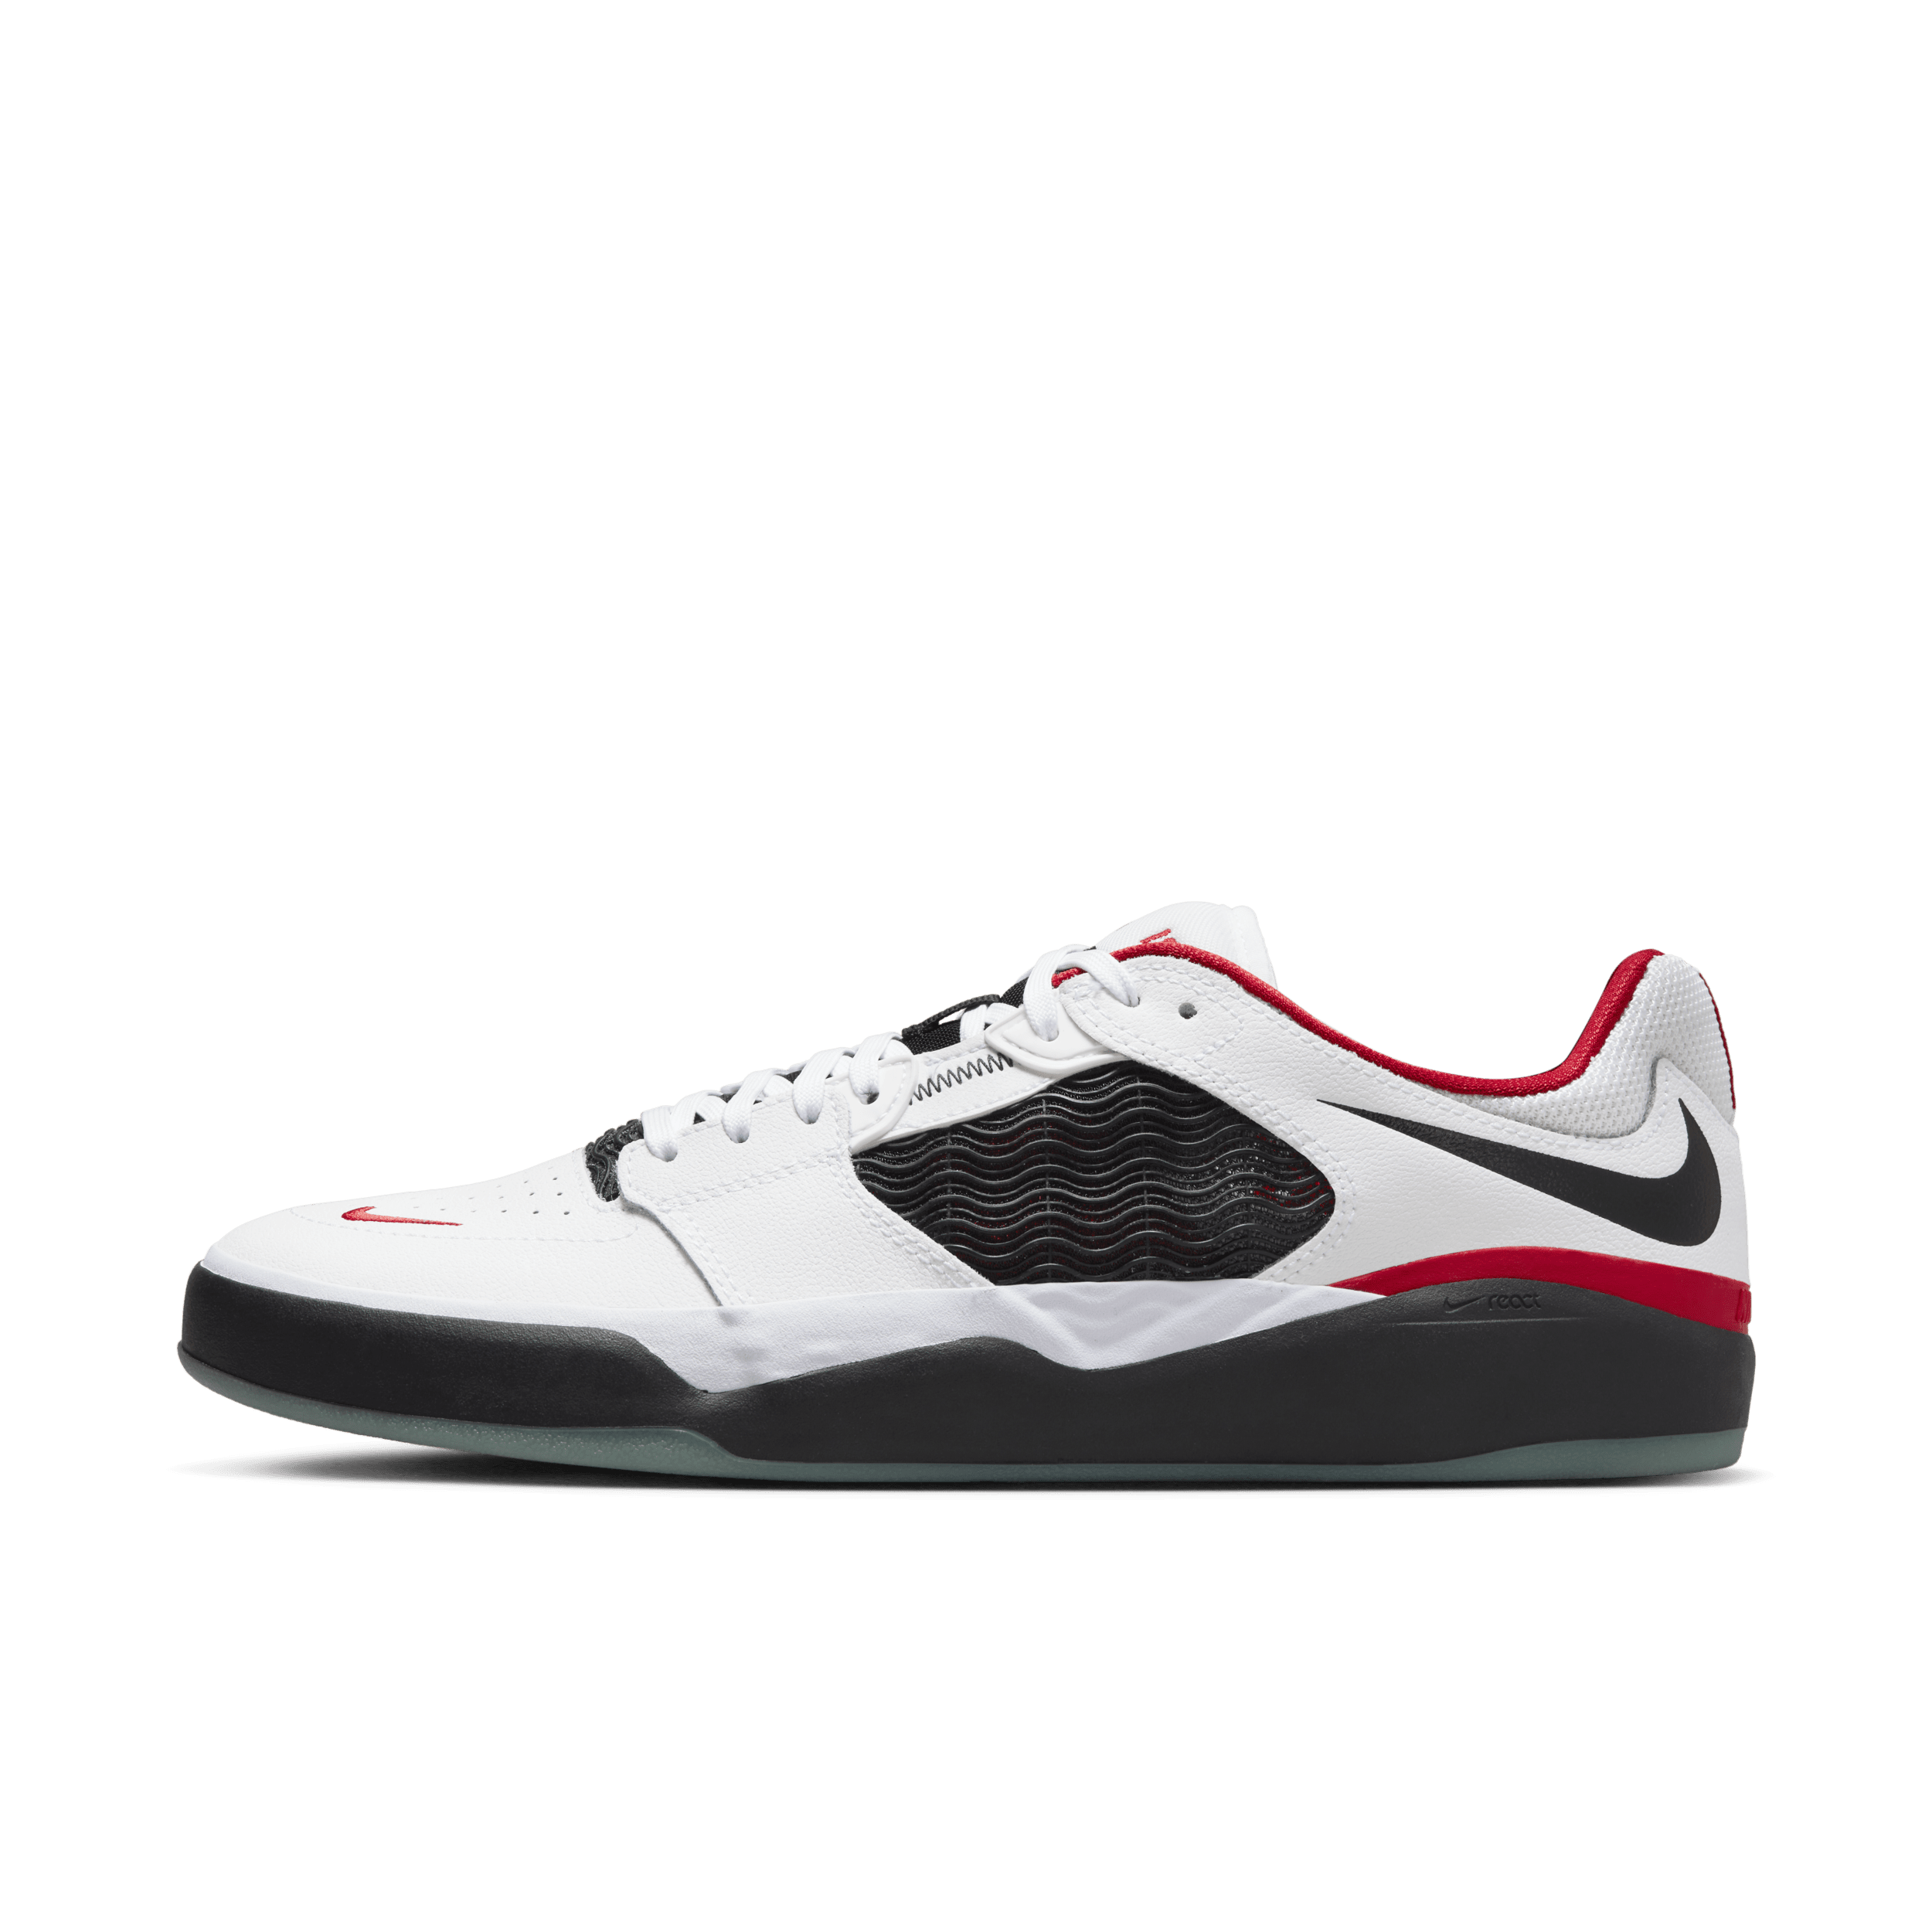 Nike SB Ishod Wair Premium Zapatillas de skateboard - Hombre - Blanco